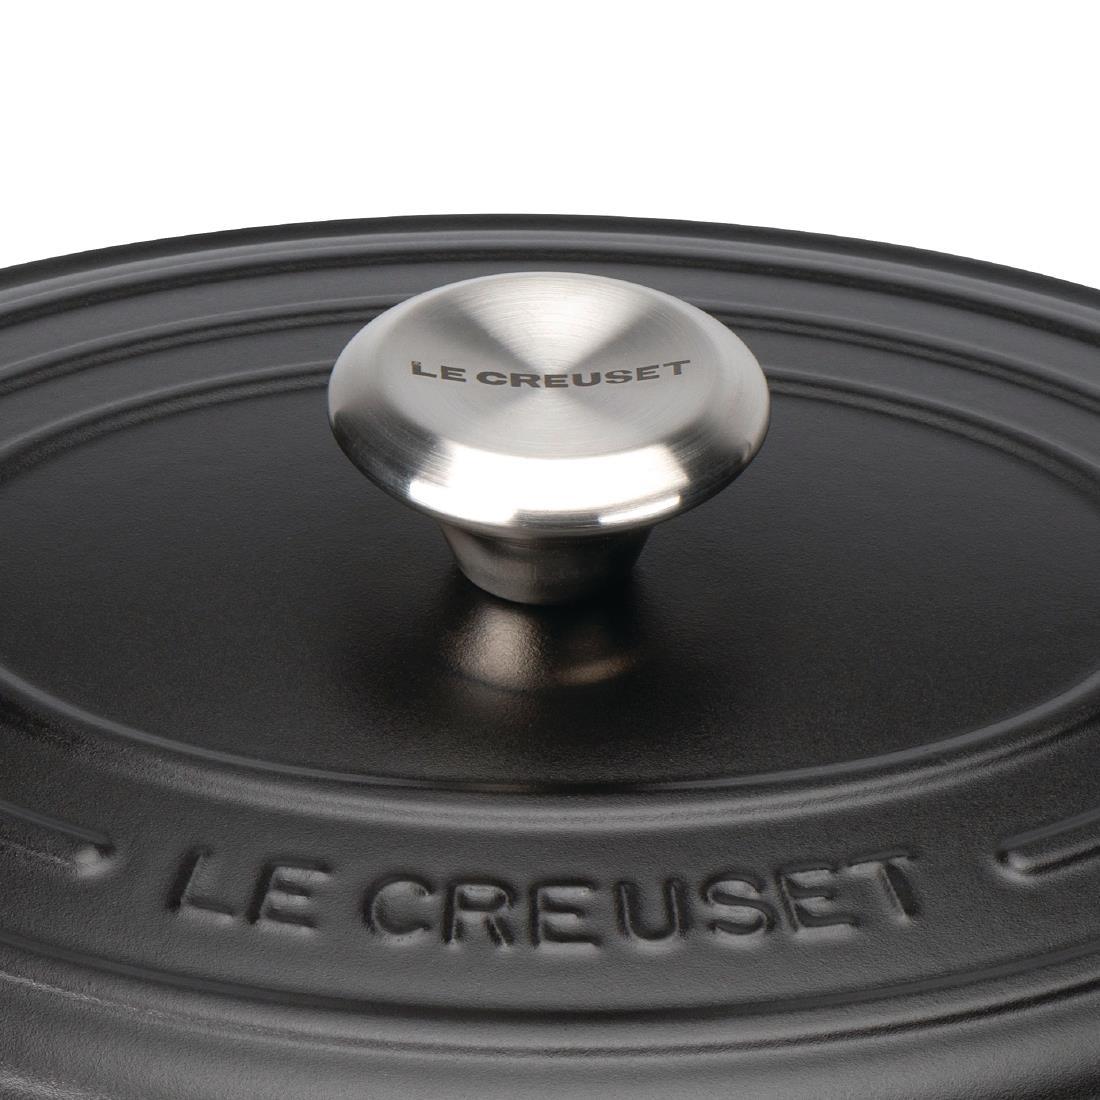 Le Creuset Cast Iron Oval Casserole 4.1L Satin Black - DR466  - 4